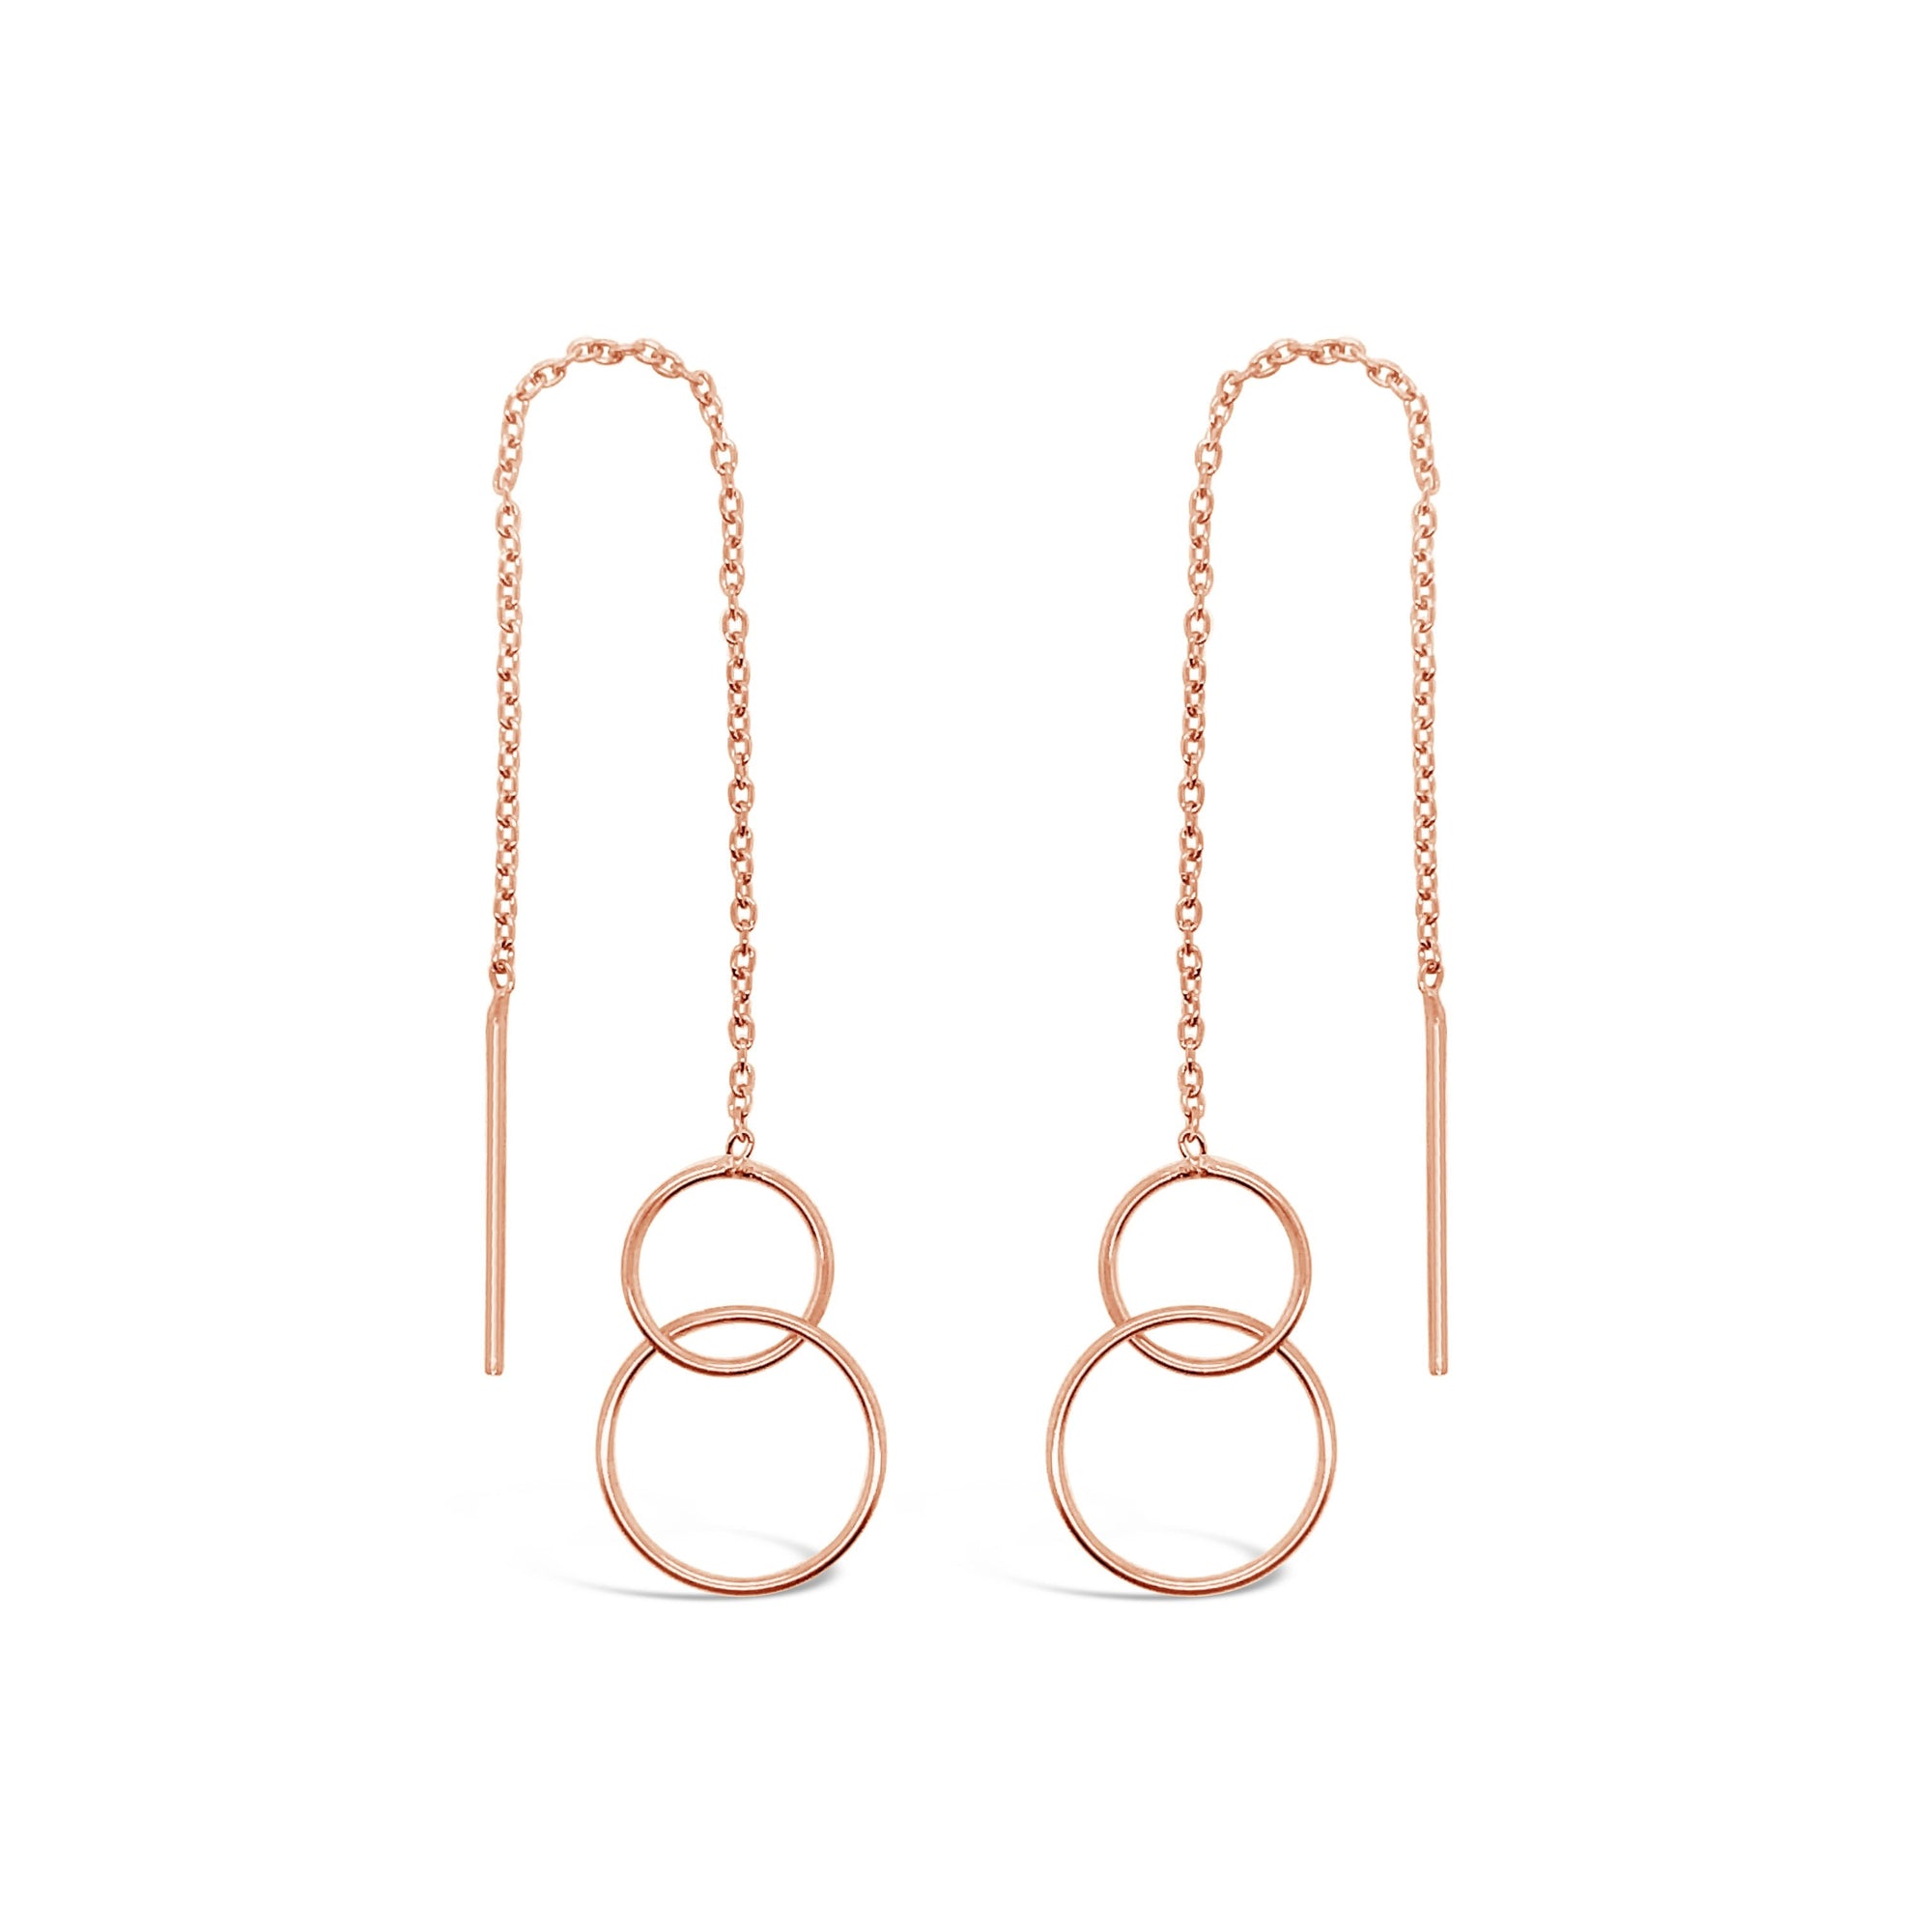 Duo Jewellery Earrings Duo double circle thread earrings